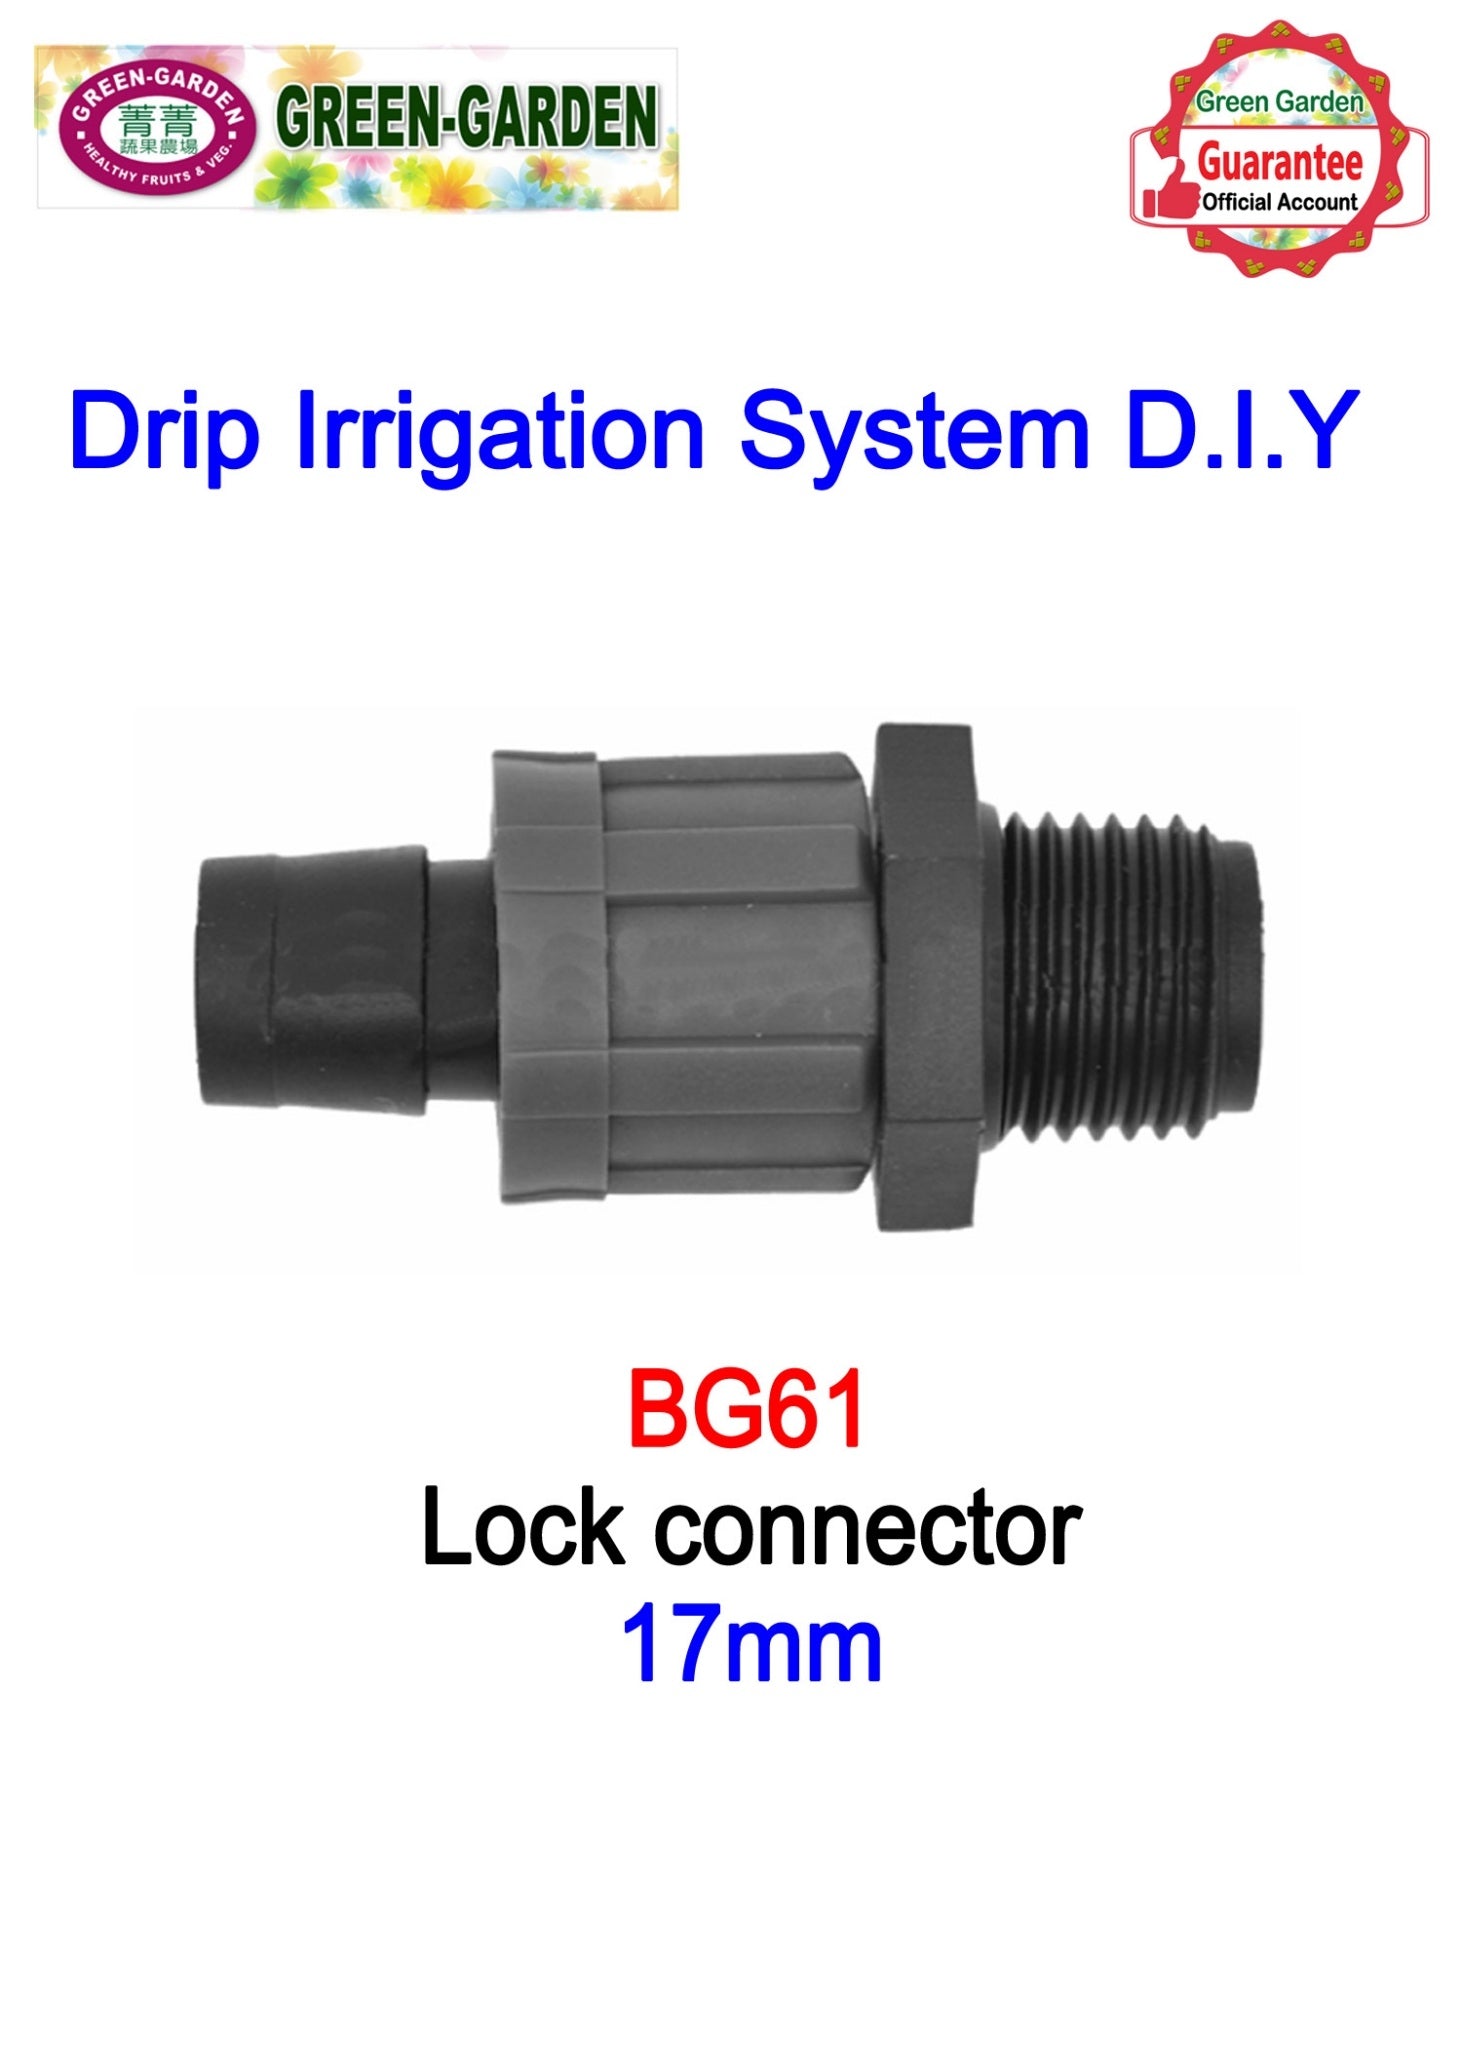 Drip Irrigation System - 17mm lock connector BG61